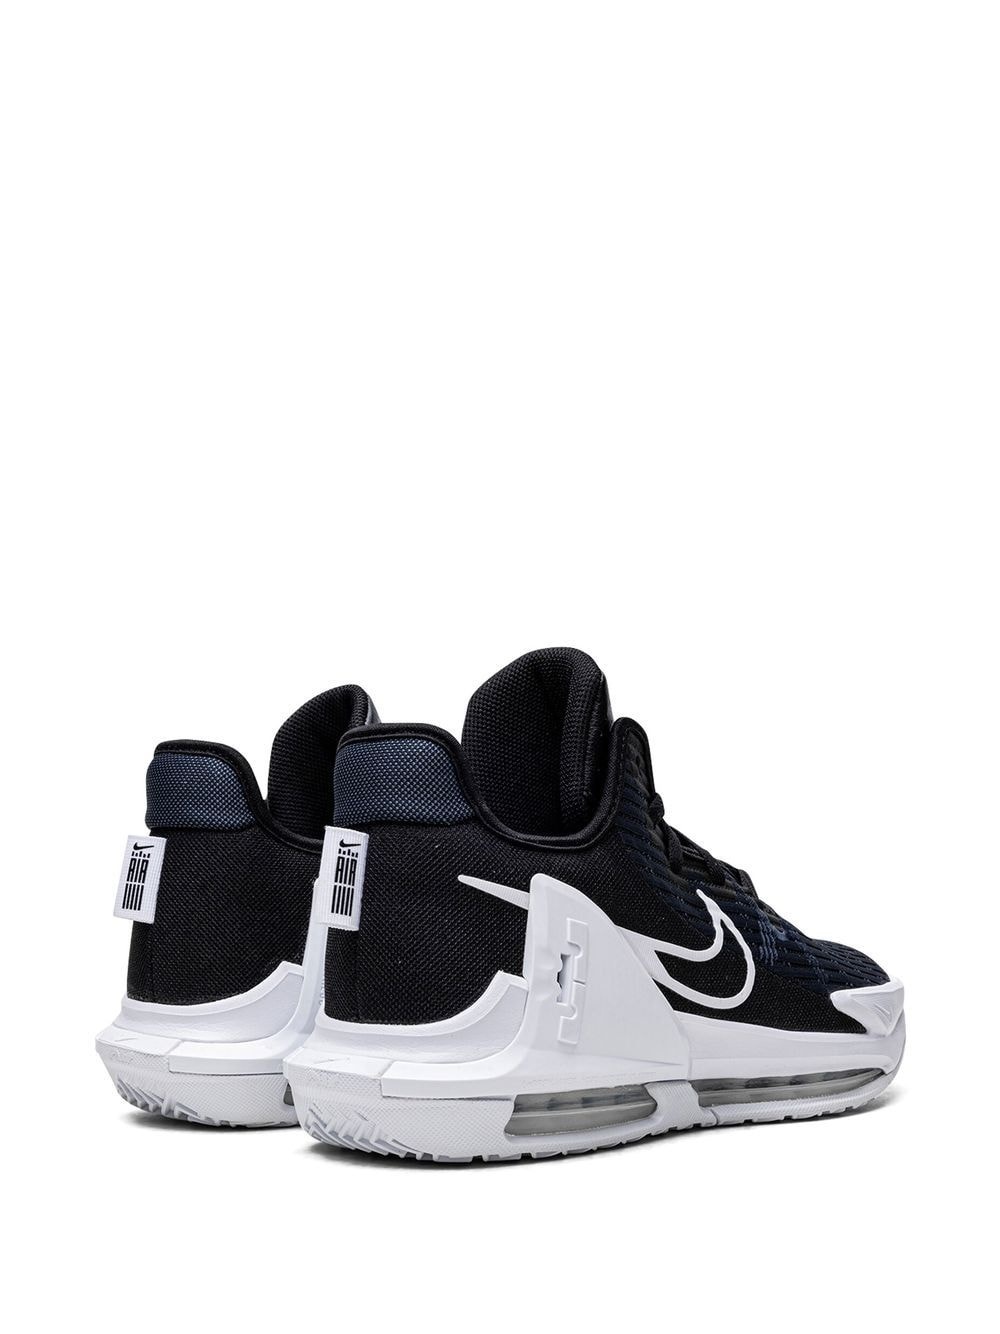 Lebron Witness VI sneakers - 3